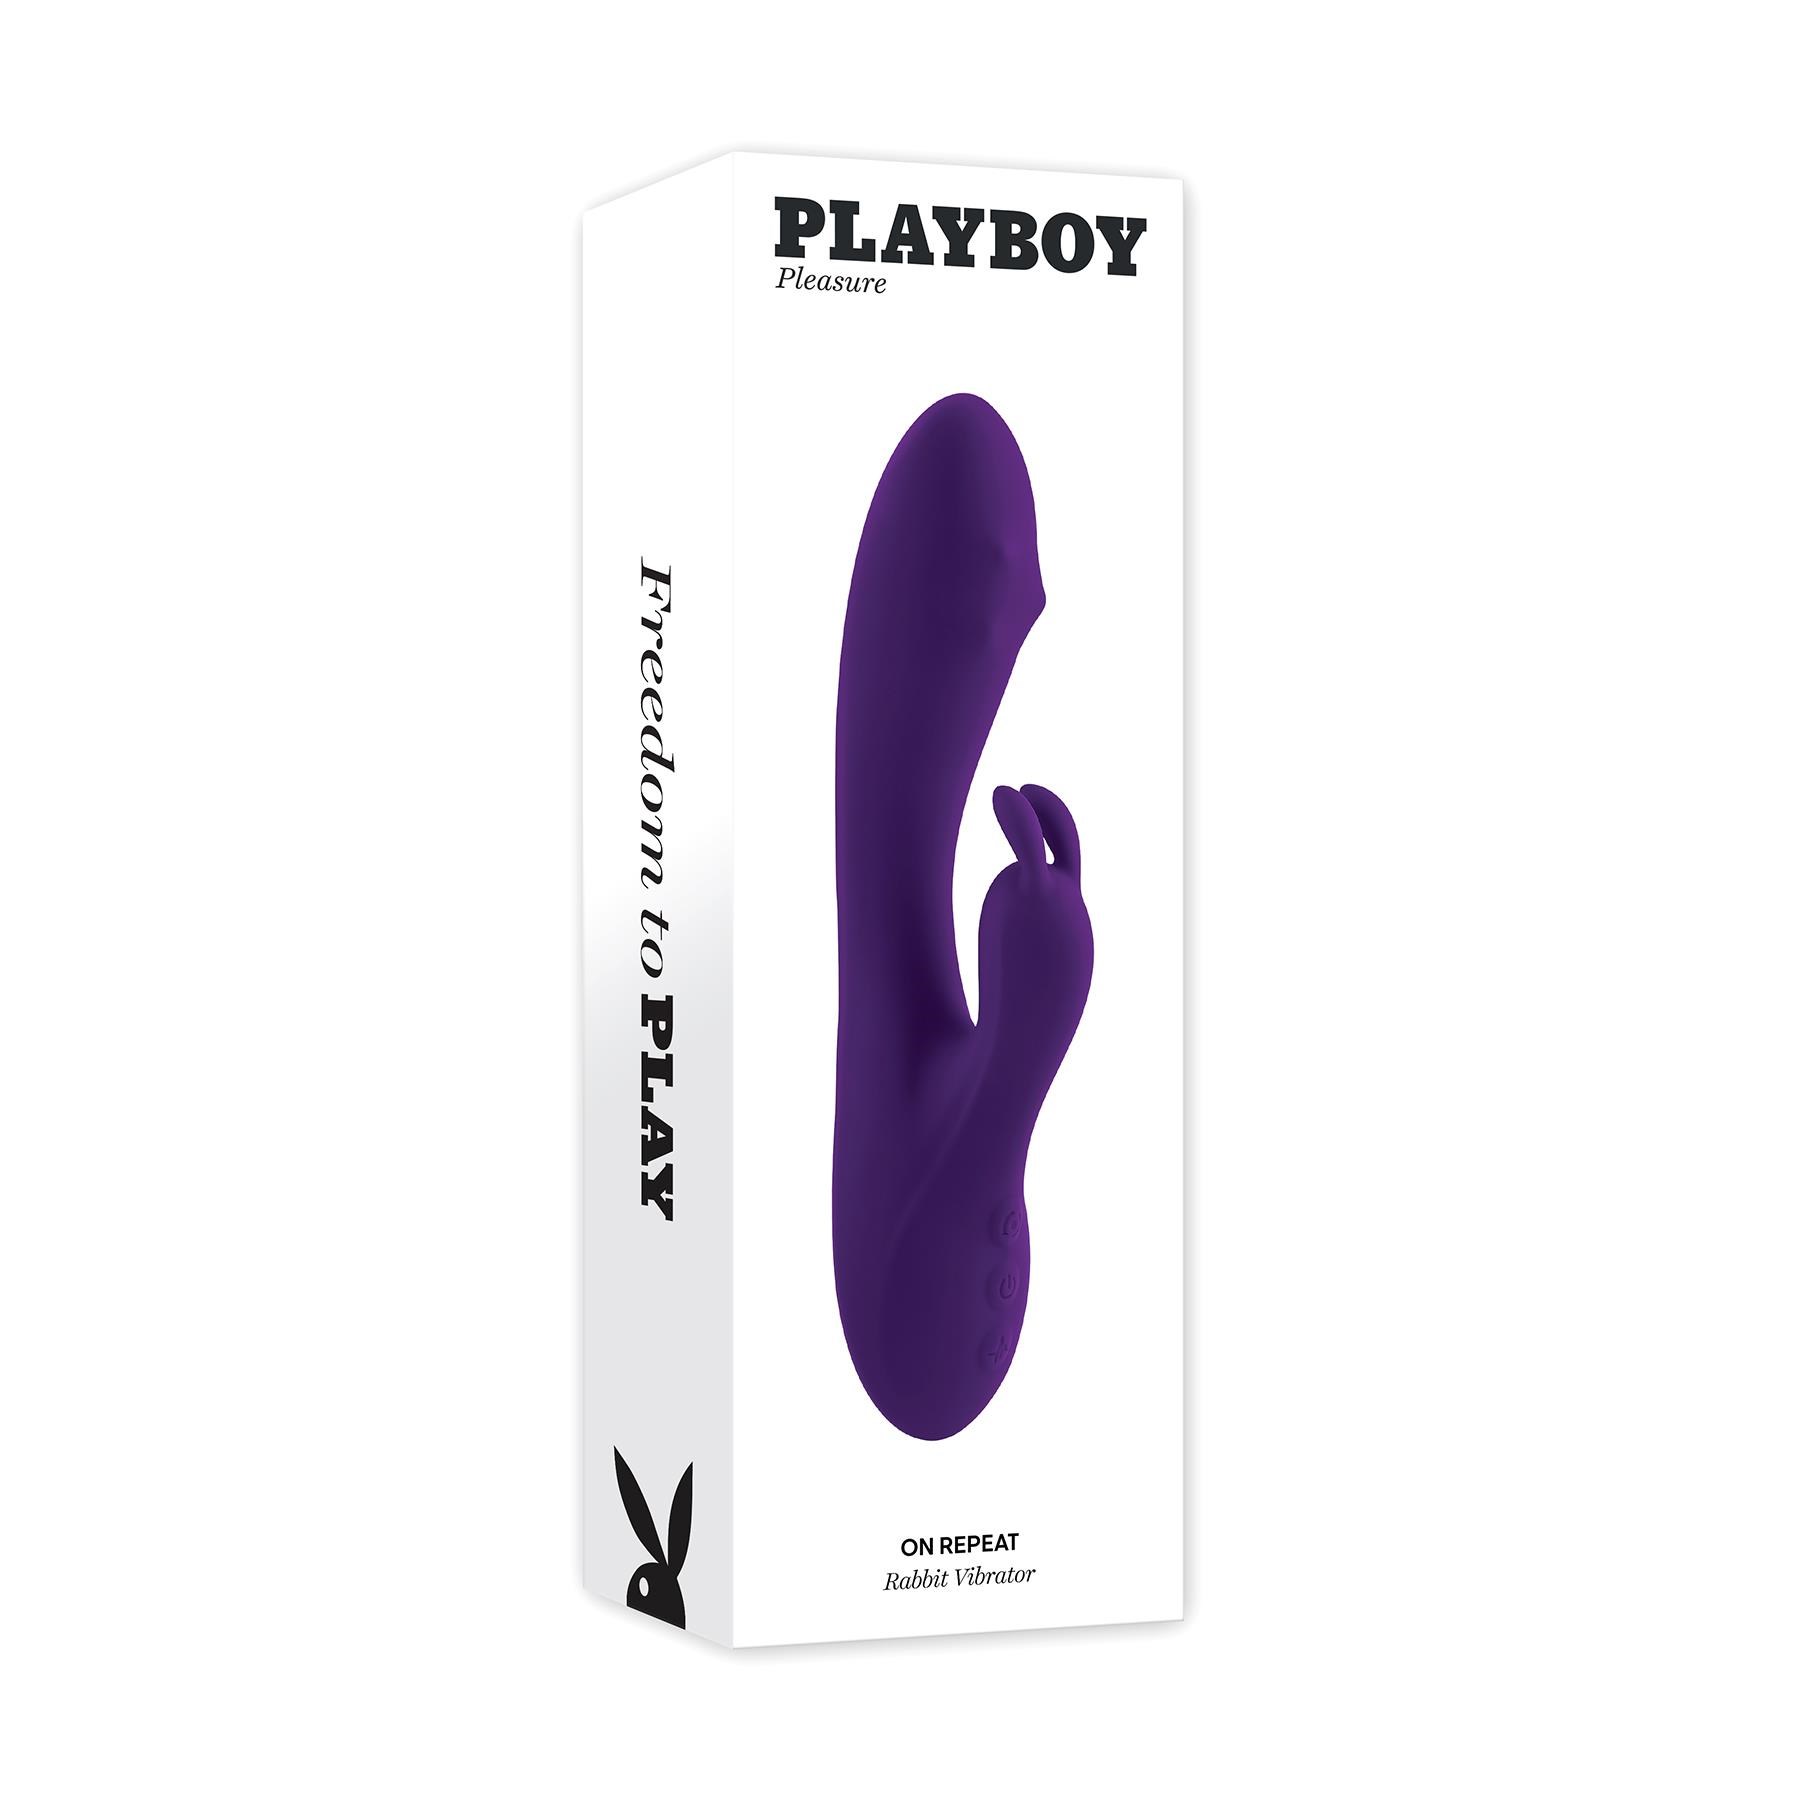 Playboy Pleasure On Repeat Rabbit Vibrator - Packaging Shot